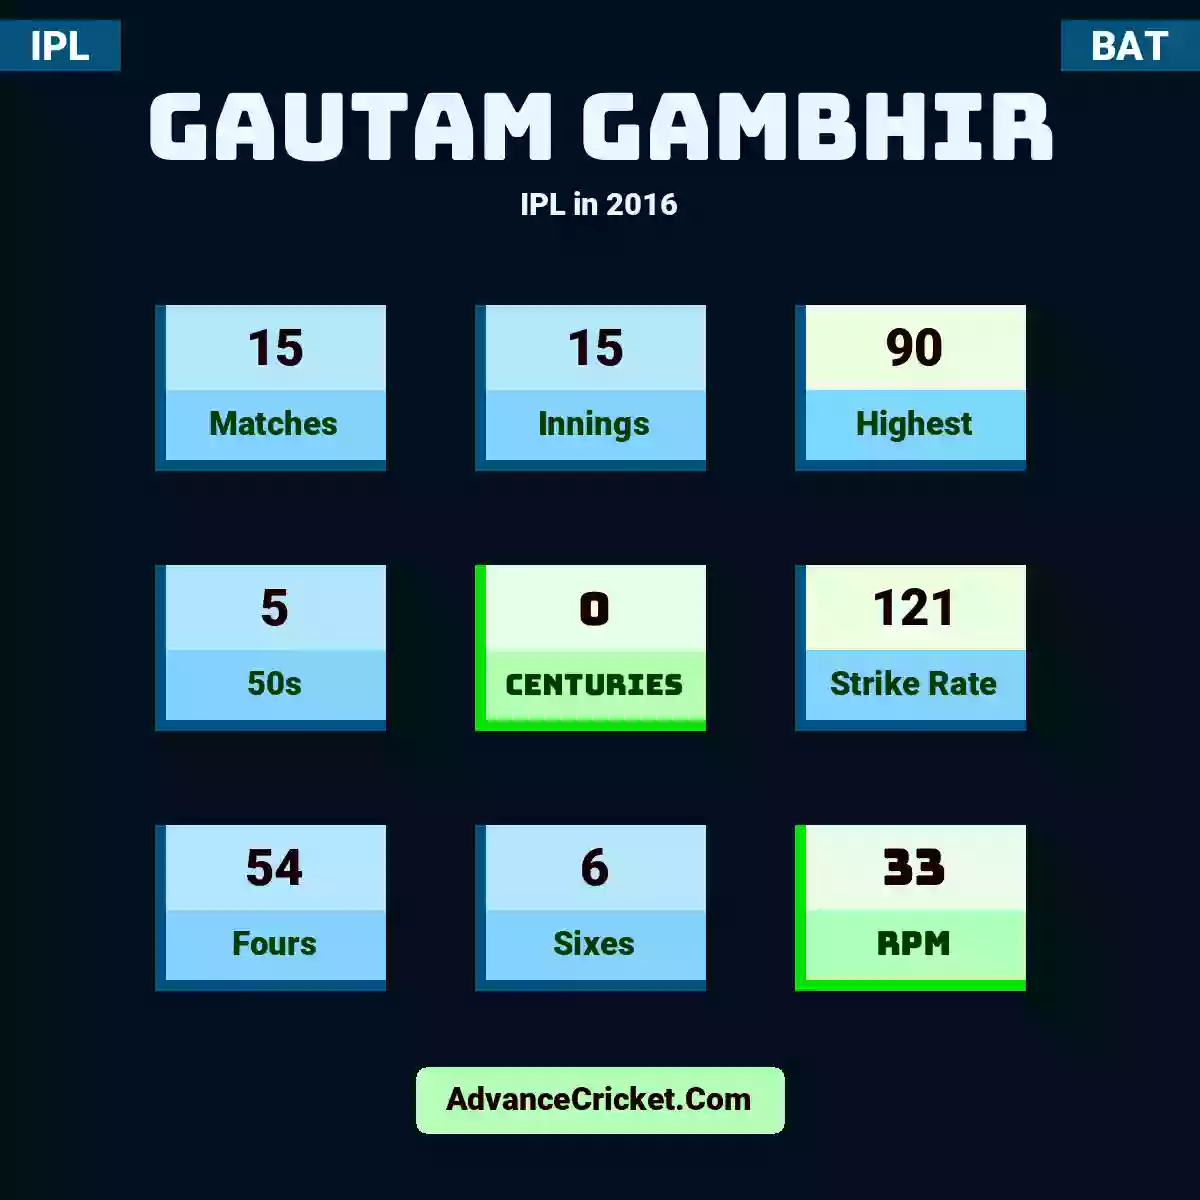 Gautam Gambhir IPL  in 2016, Gautam Gambhir played 15 matches, scored 90 runs as highest, 5 half-centuries, and 0 centuries, with a strike rate of 121. G.Gambhir hit 54 fours and 6 sixes, with an RPM of 33.